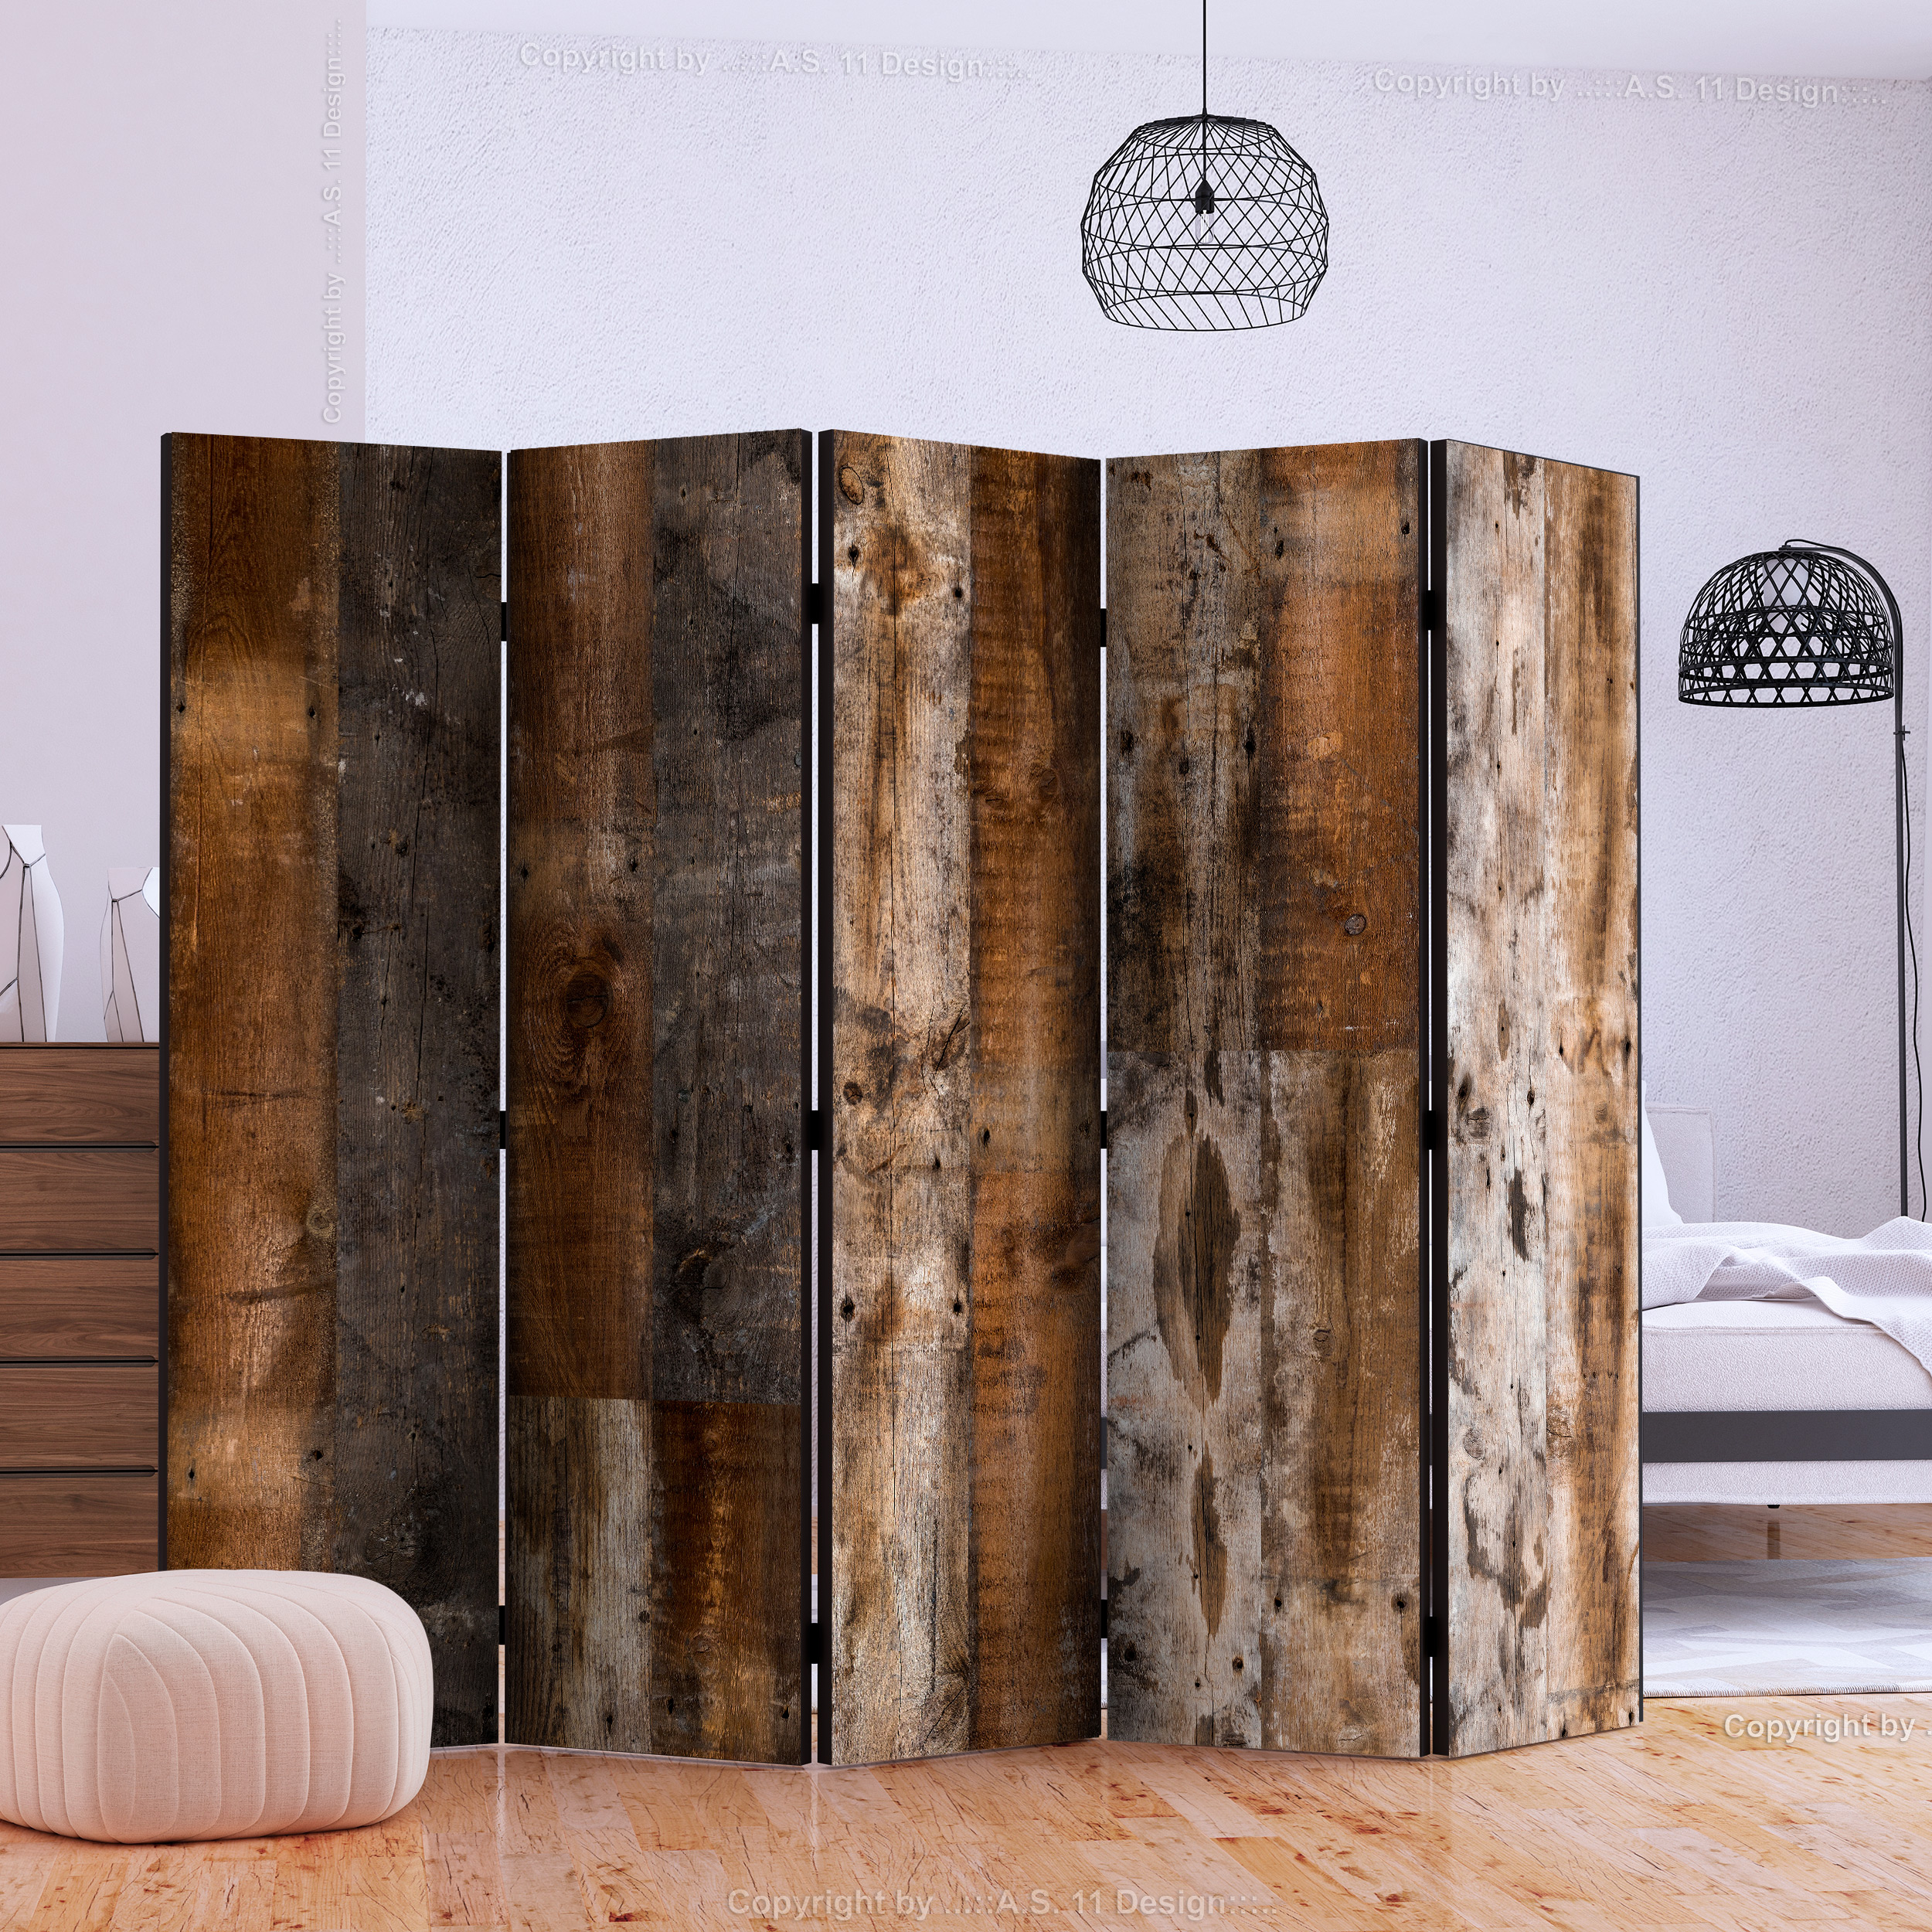 Holz Paravent Raumteiler Spanische Wand Trennwand Design Brett Baum Opitk 6motiv Ebay